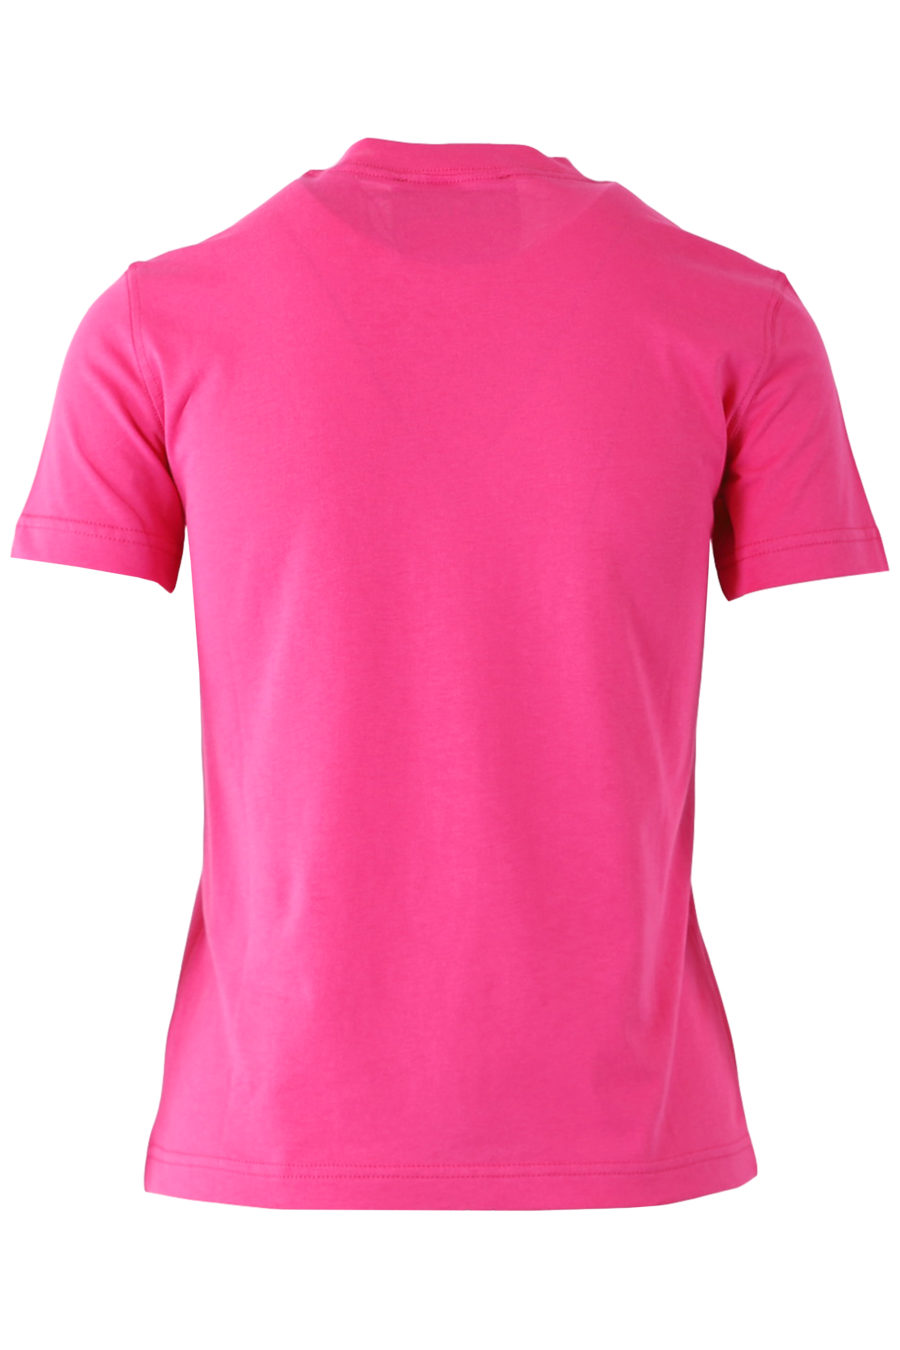 Rosa T-Shirt mit Golddruck - 66588debb3bdbe50f66521e26041bbe44ed2c033